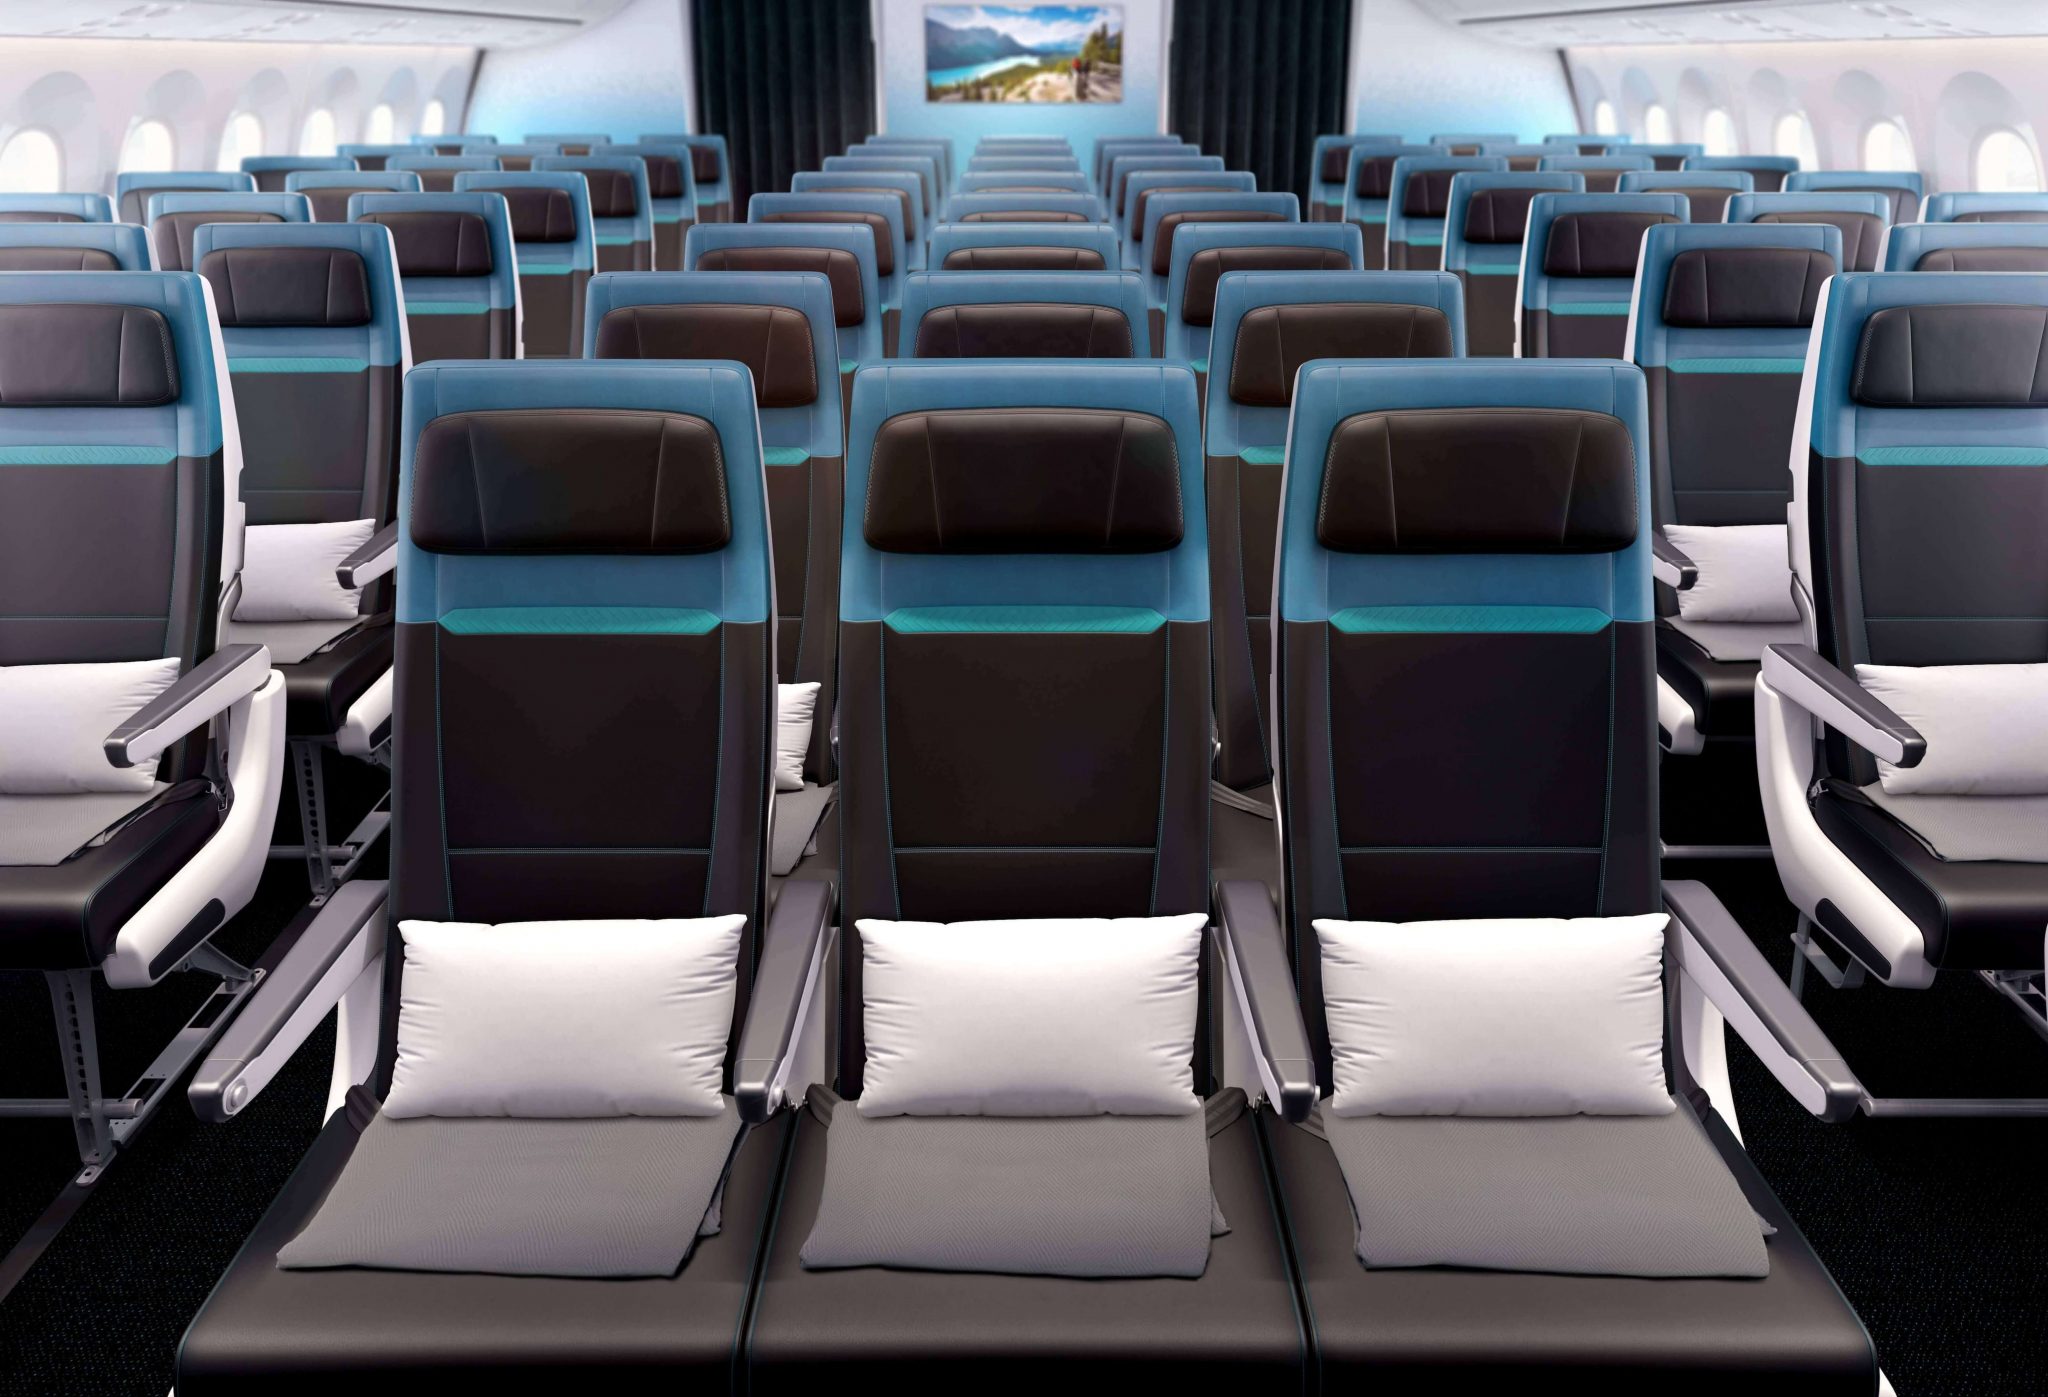 WestJet orders over 4,700 aircraft seats